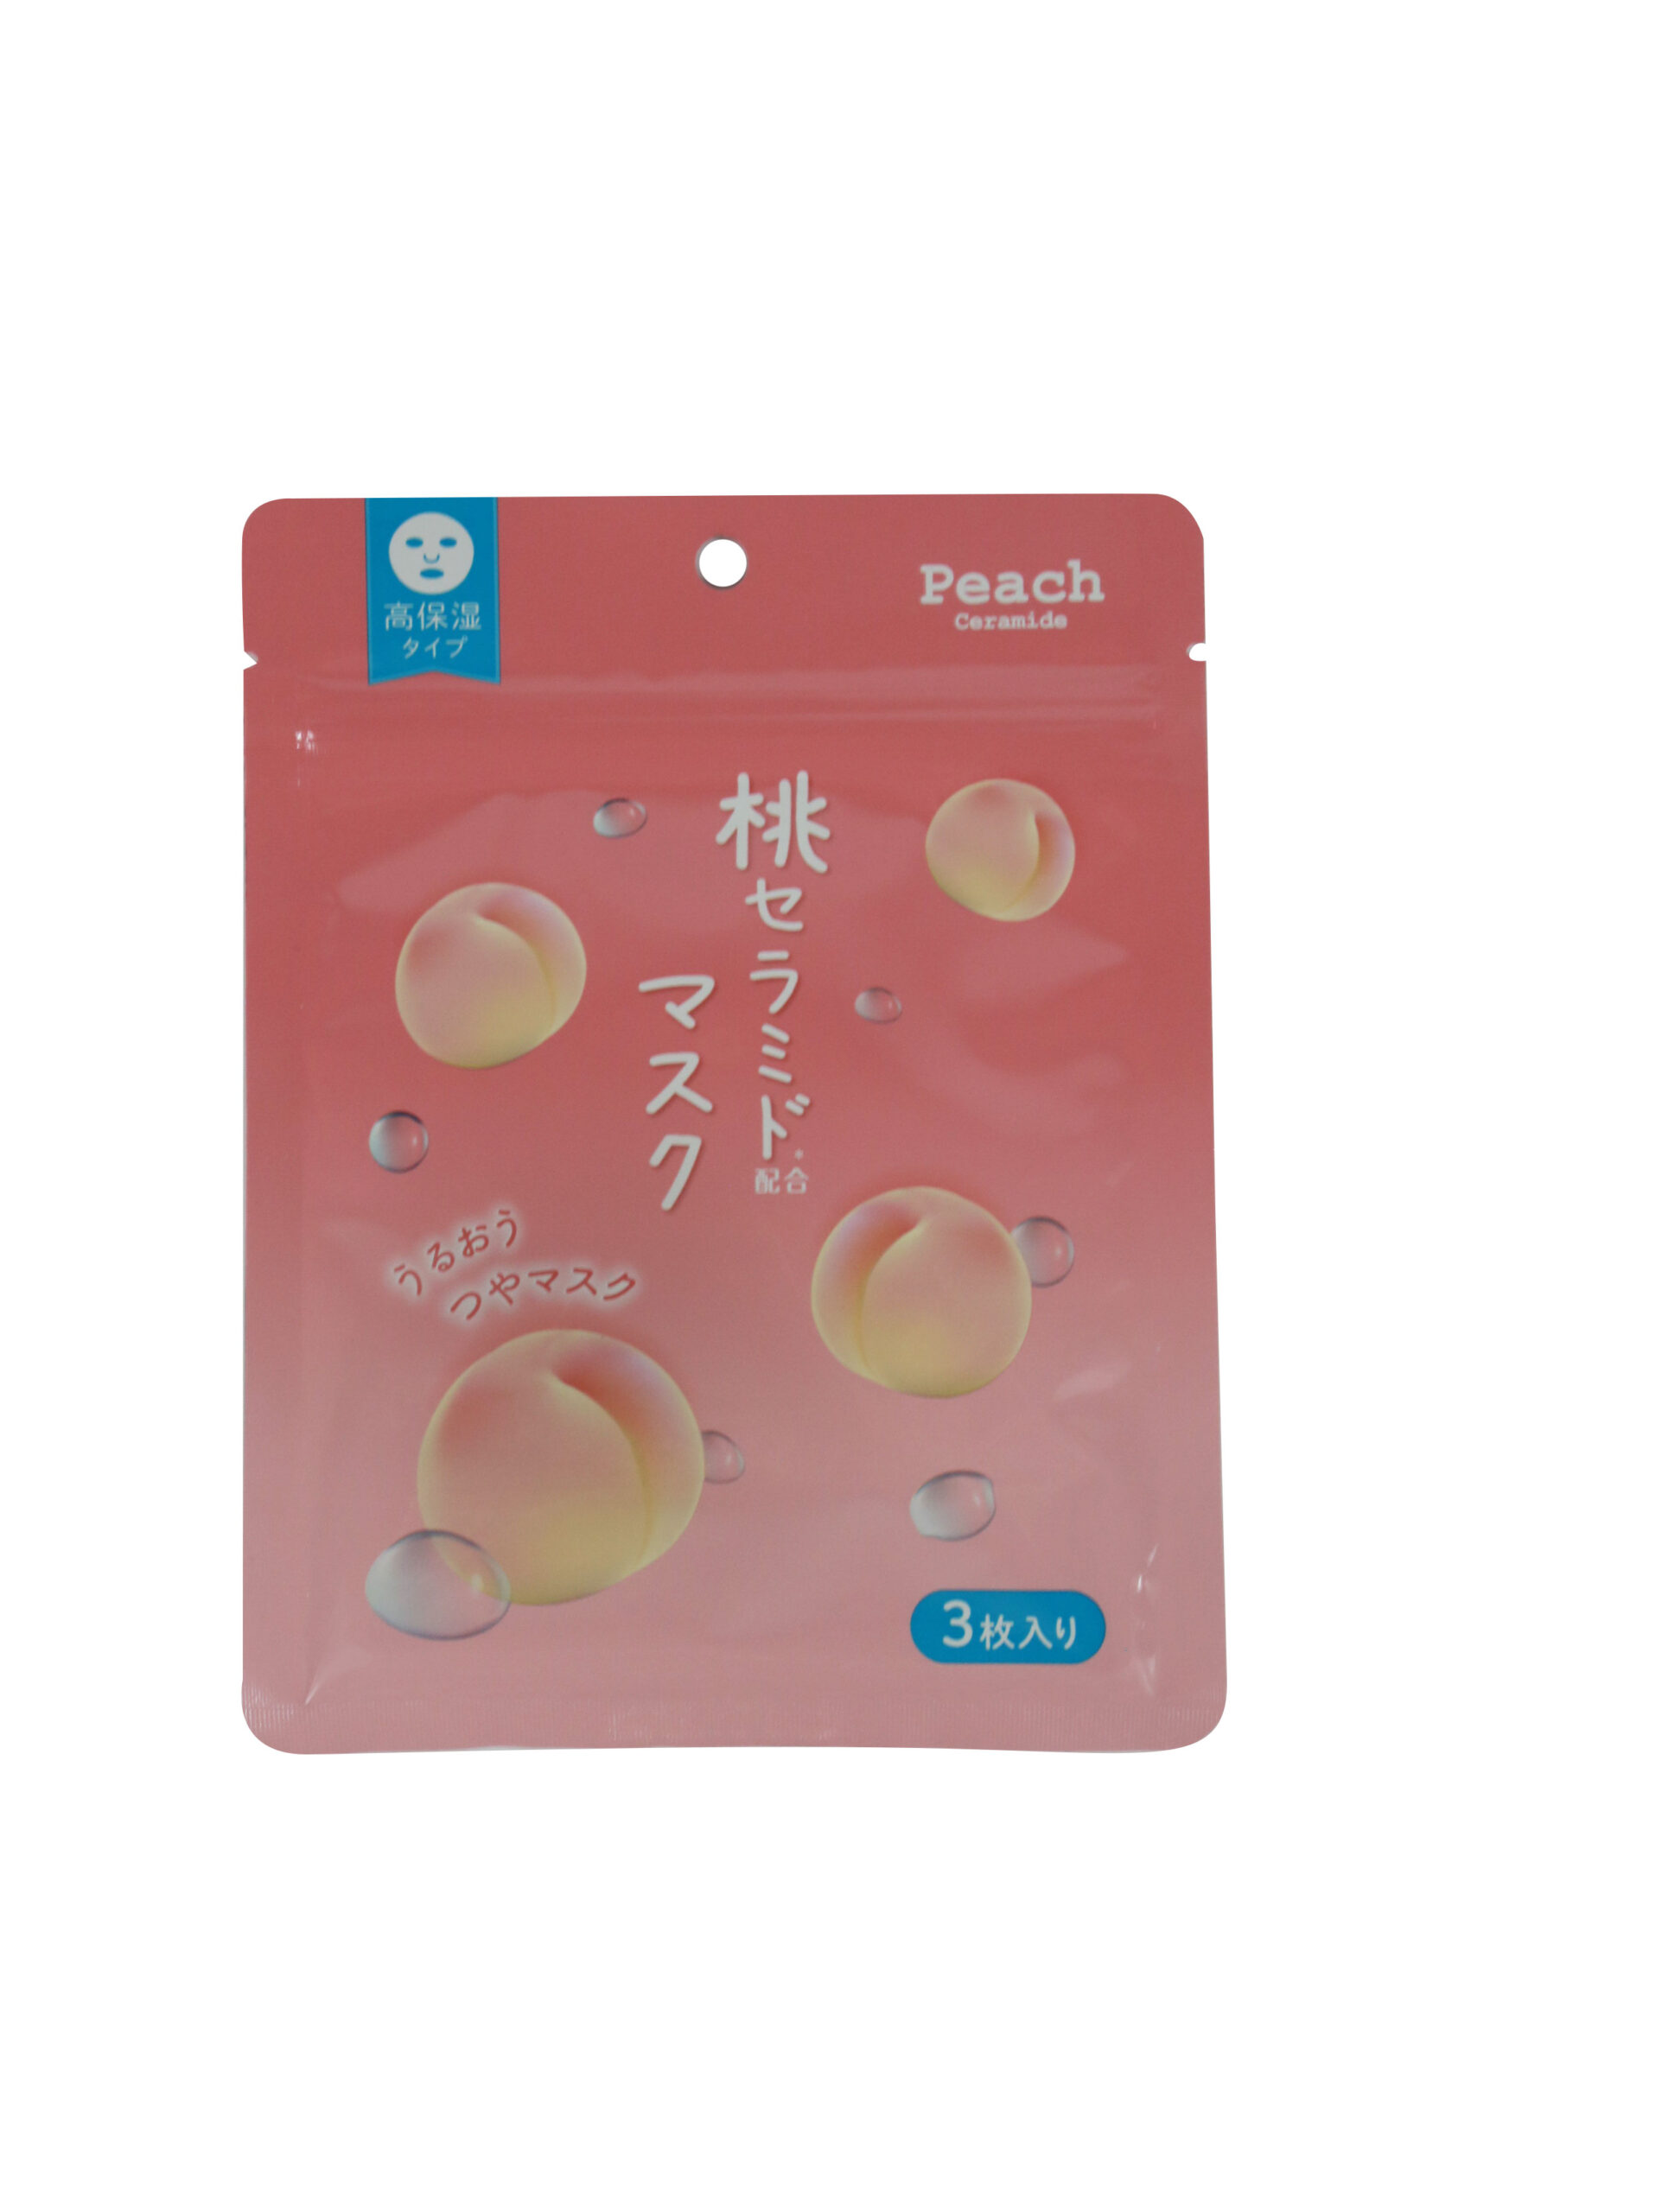 Peach Ceramide Face Mask - Daiso Japan Middle East